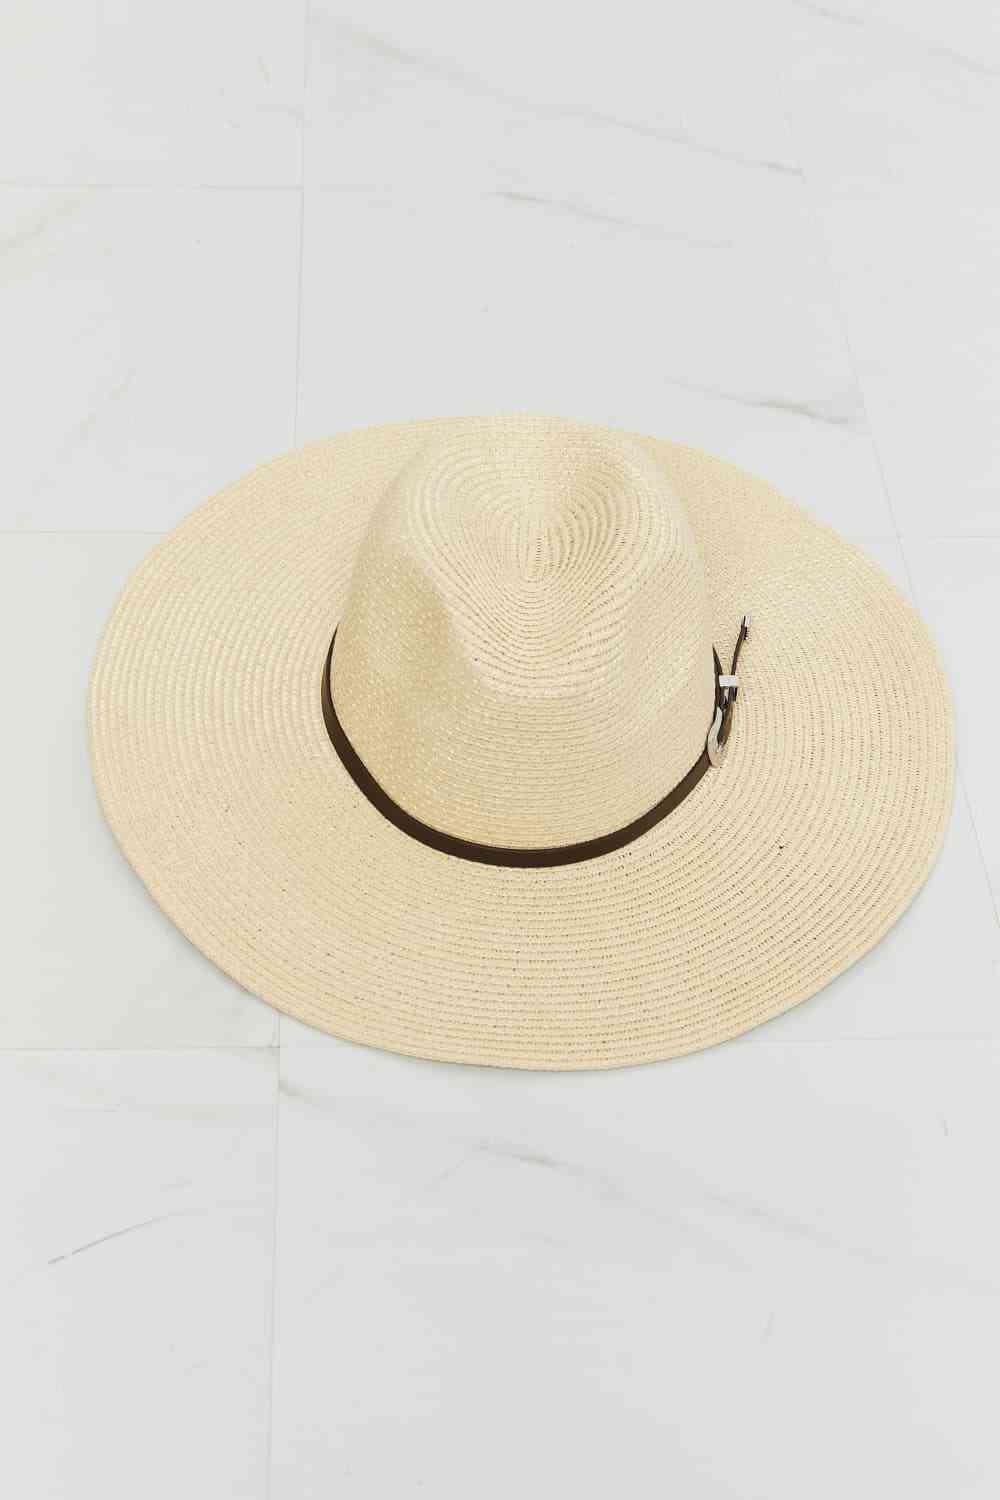 Fame Boho Summer Straw Fedora Hat - Tigbuls Variety Fashion